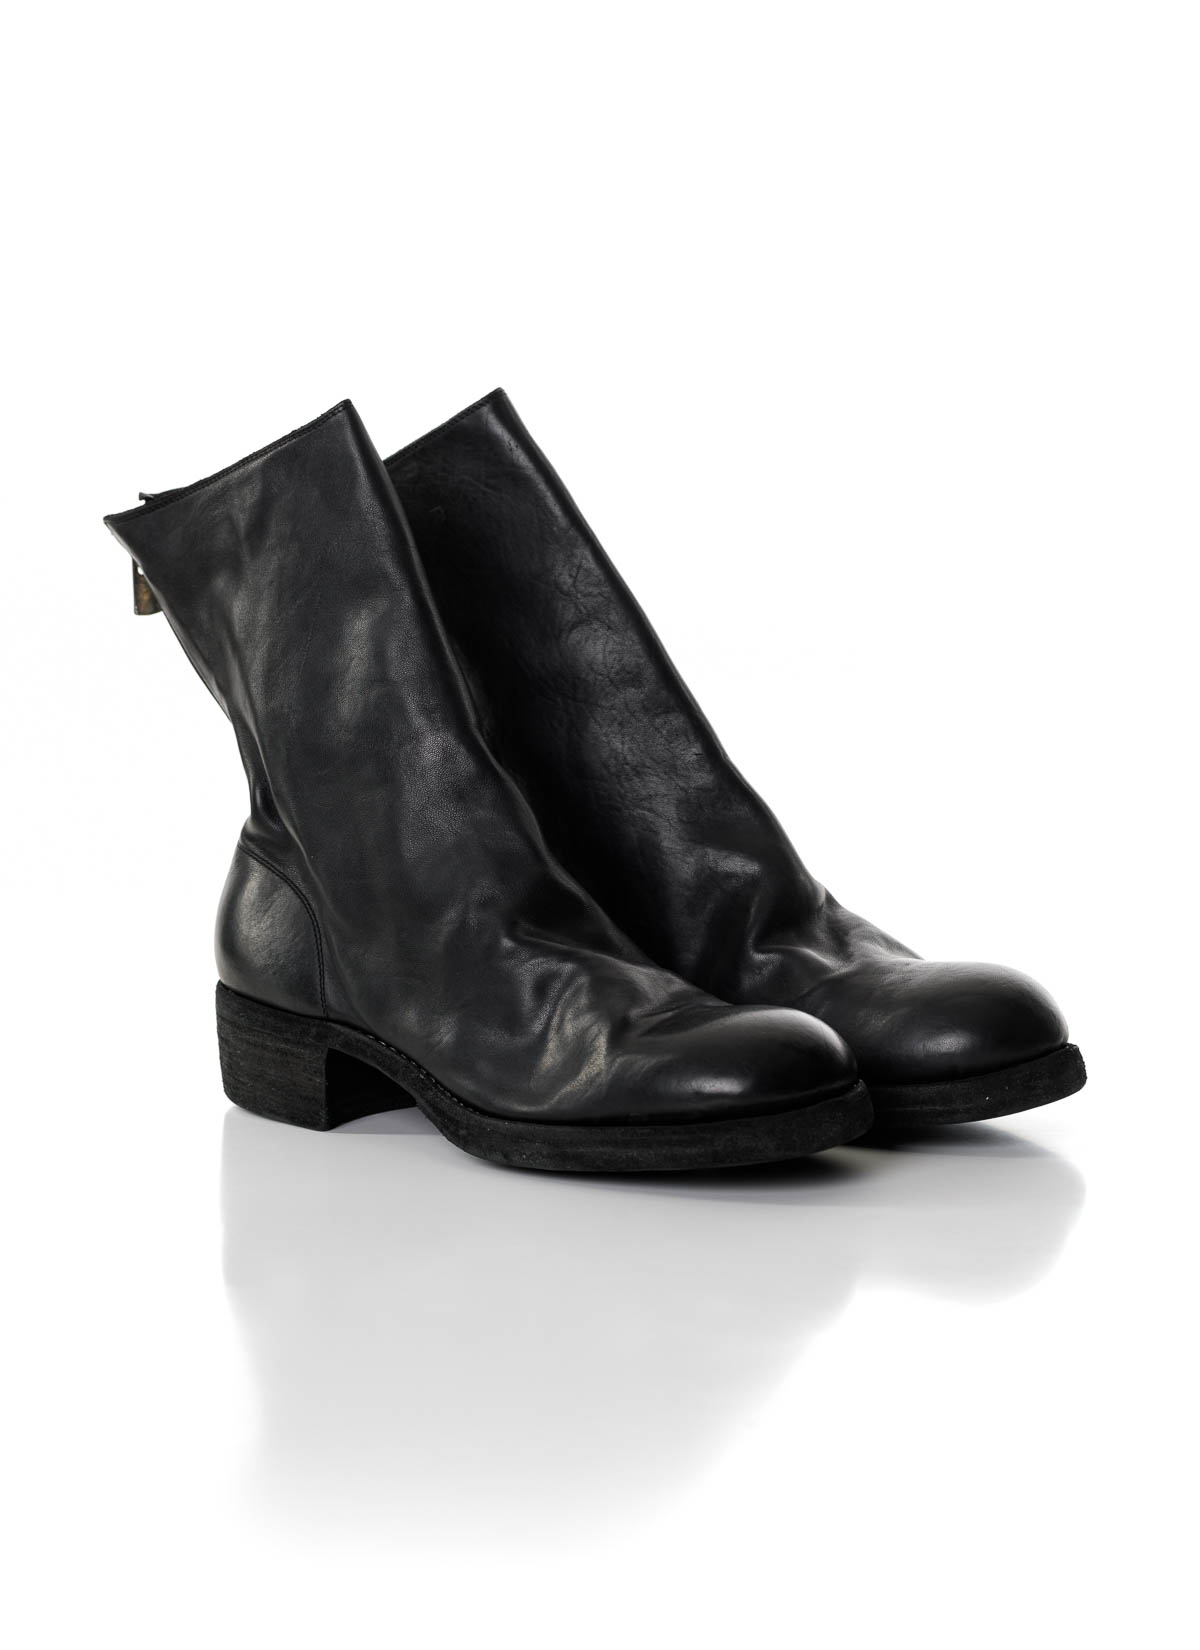 hide-m | GUIDI Men 788z Back Zip Boot, black horse leather